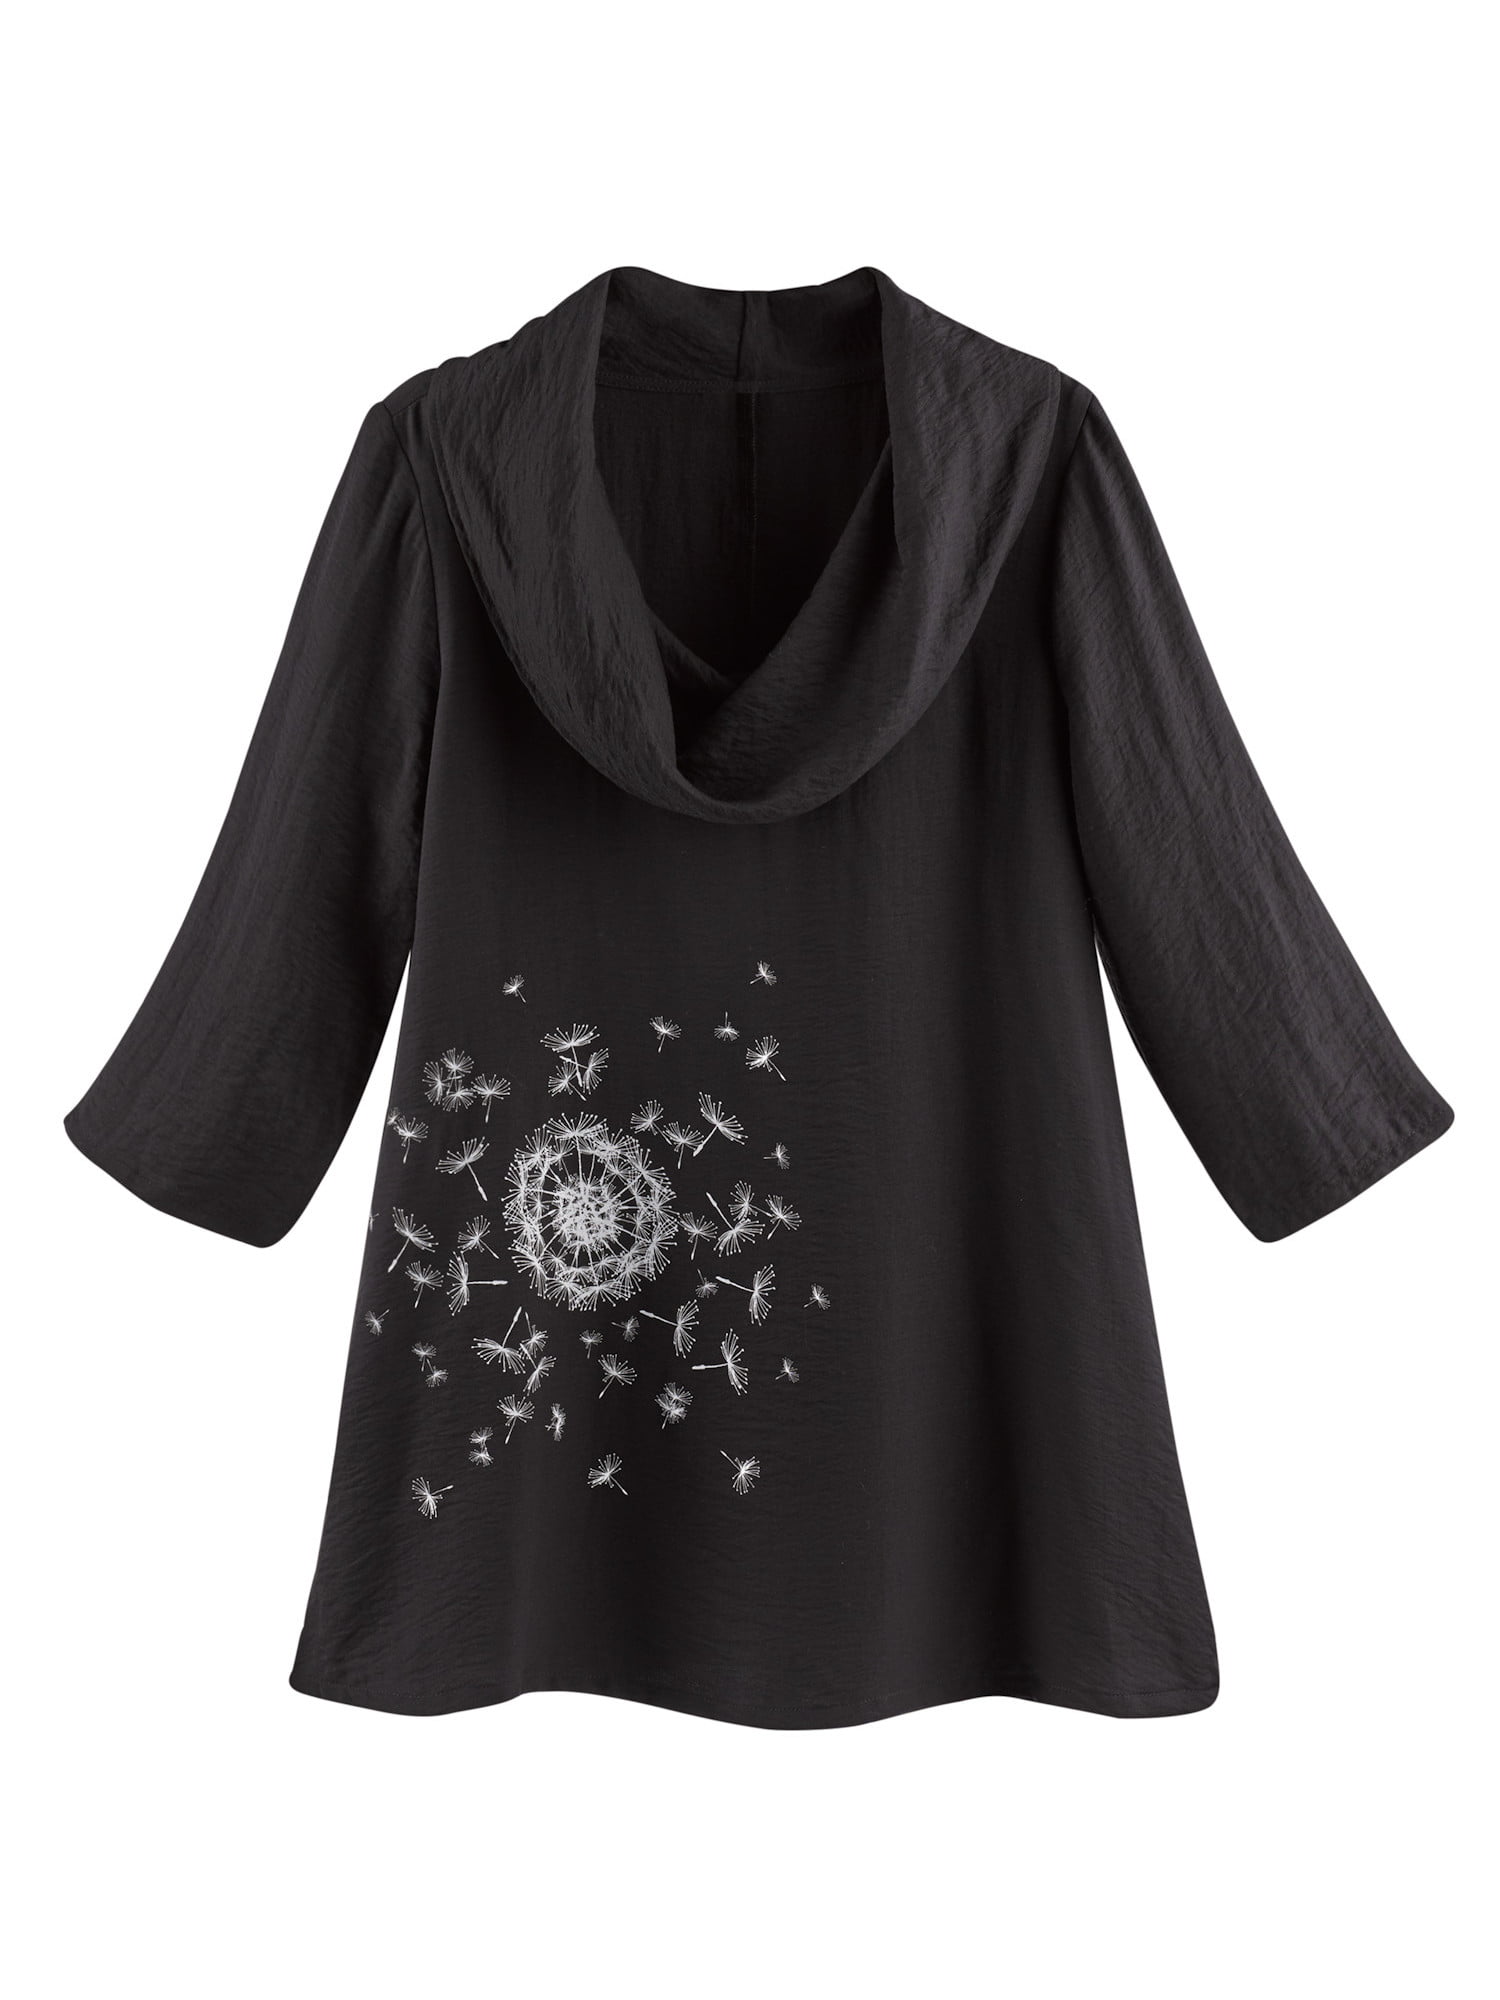 Black 3/4 Sleeve A-Line Shirt EtLois Dandelion Print Cowl Neck Tunic Top 